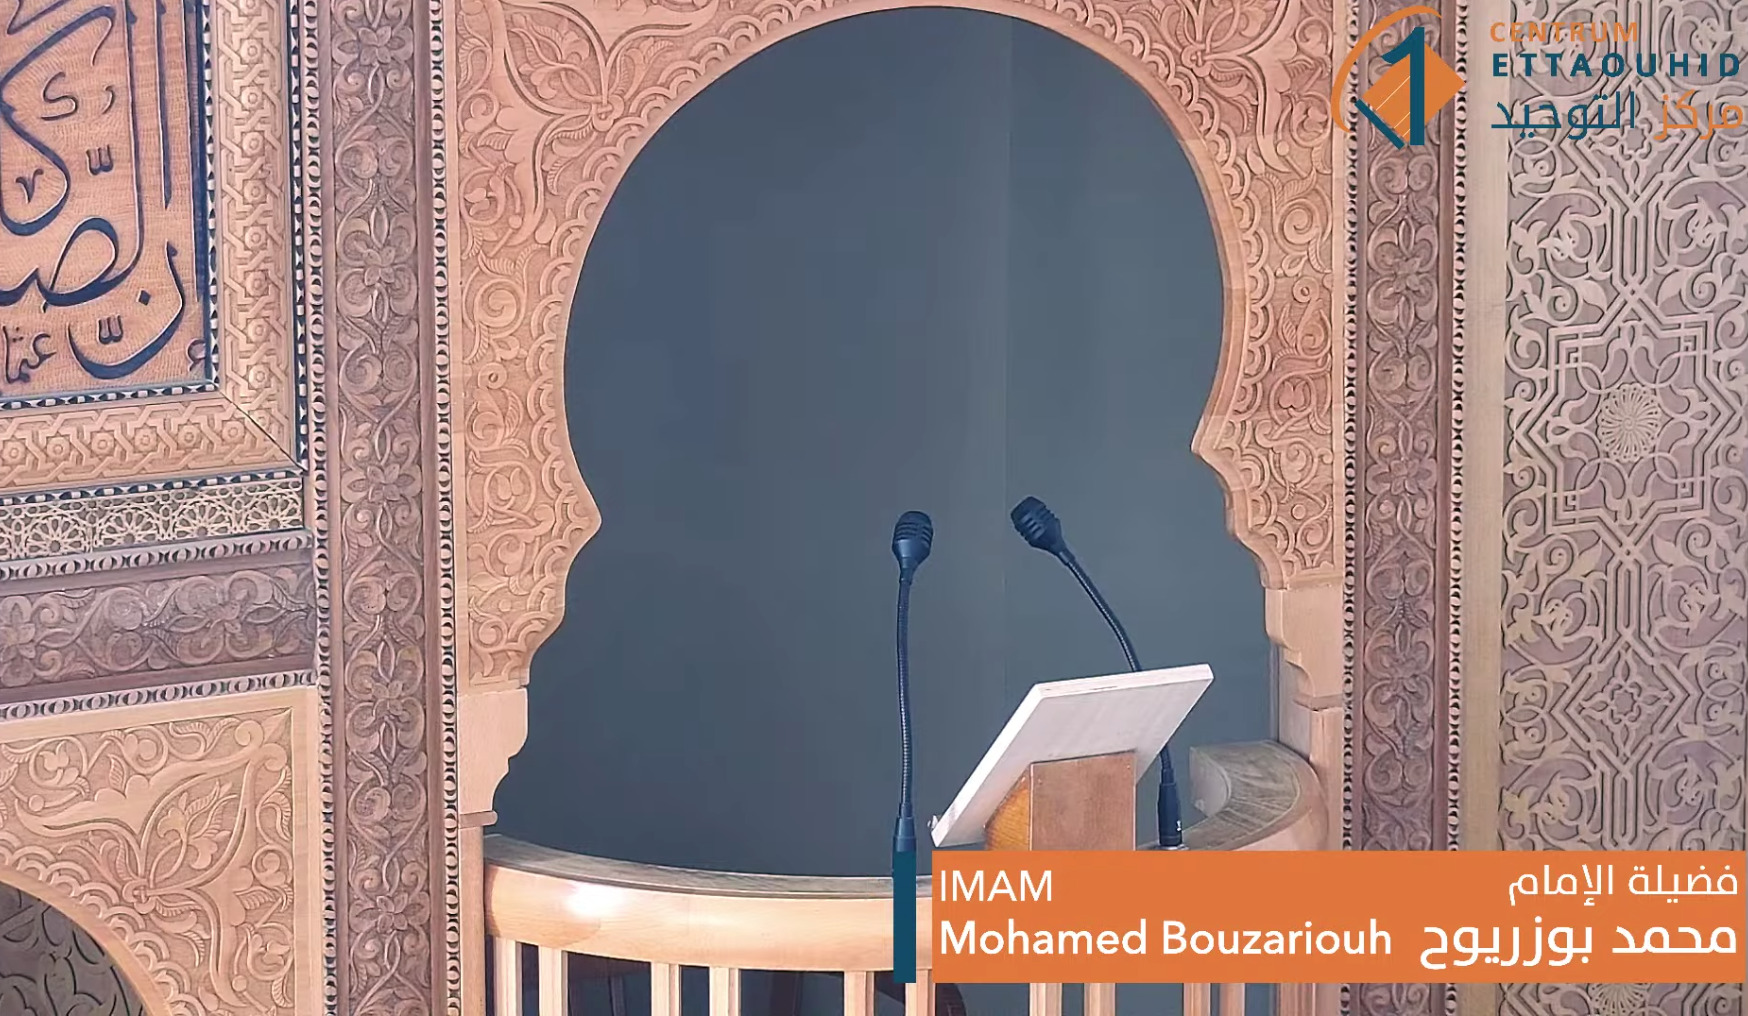 Imam houdt omstreden preek over Israël in Rotterdamse moskee